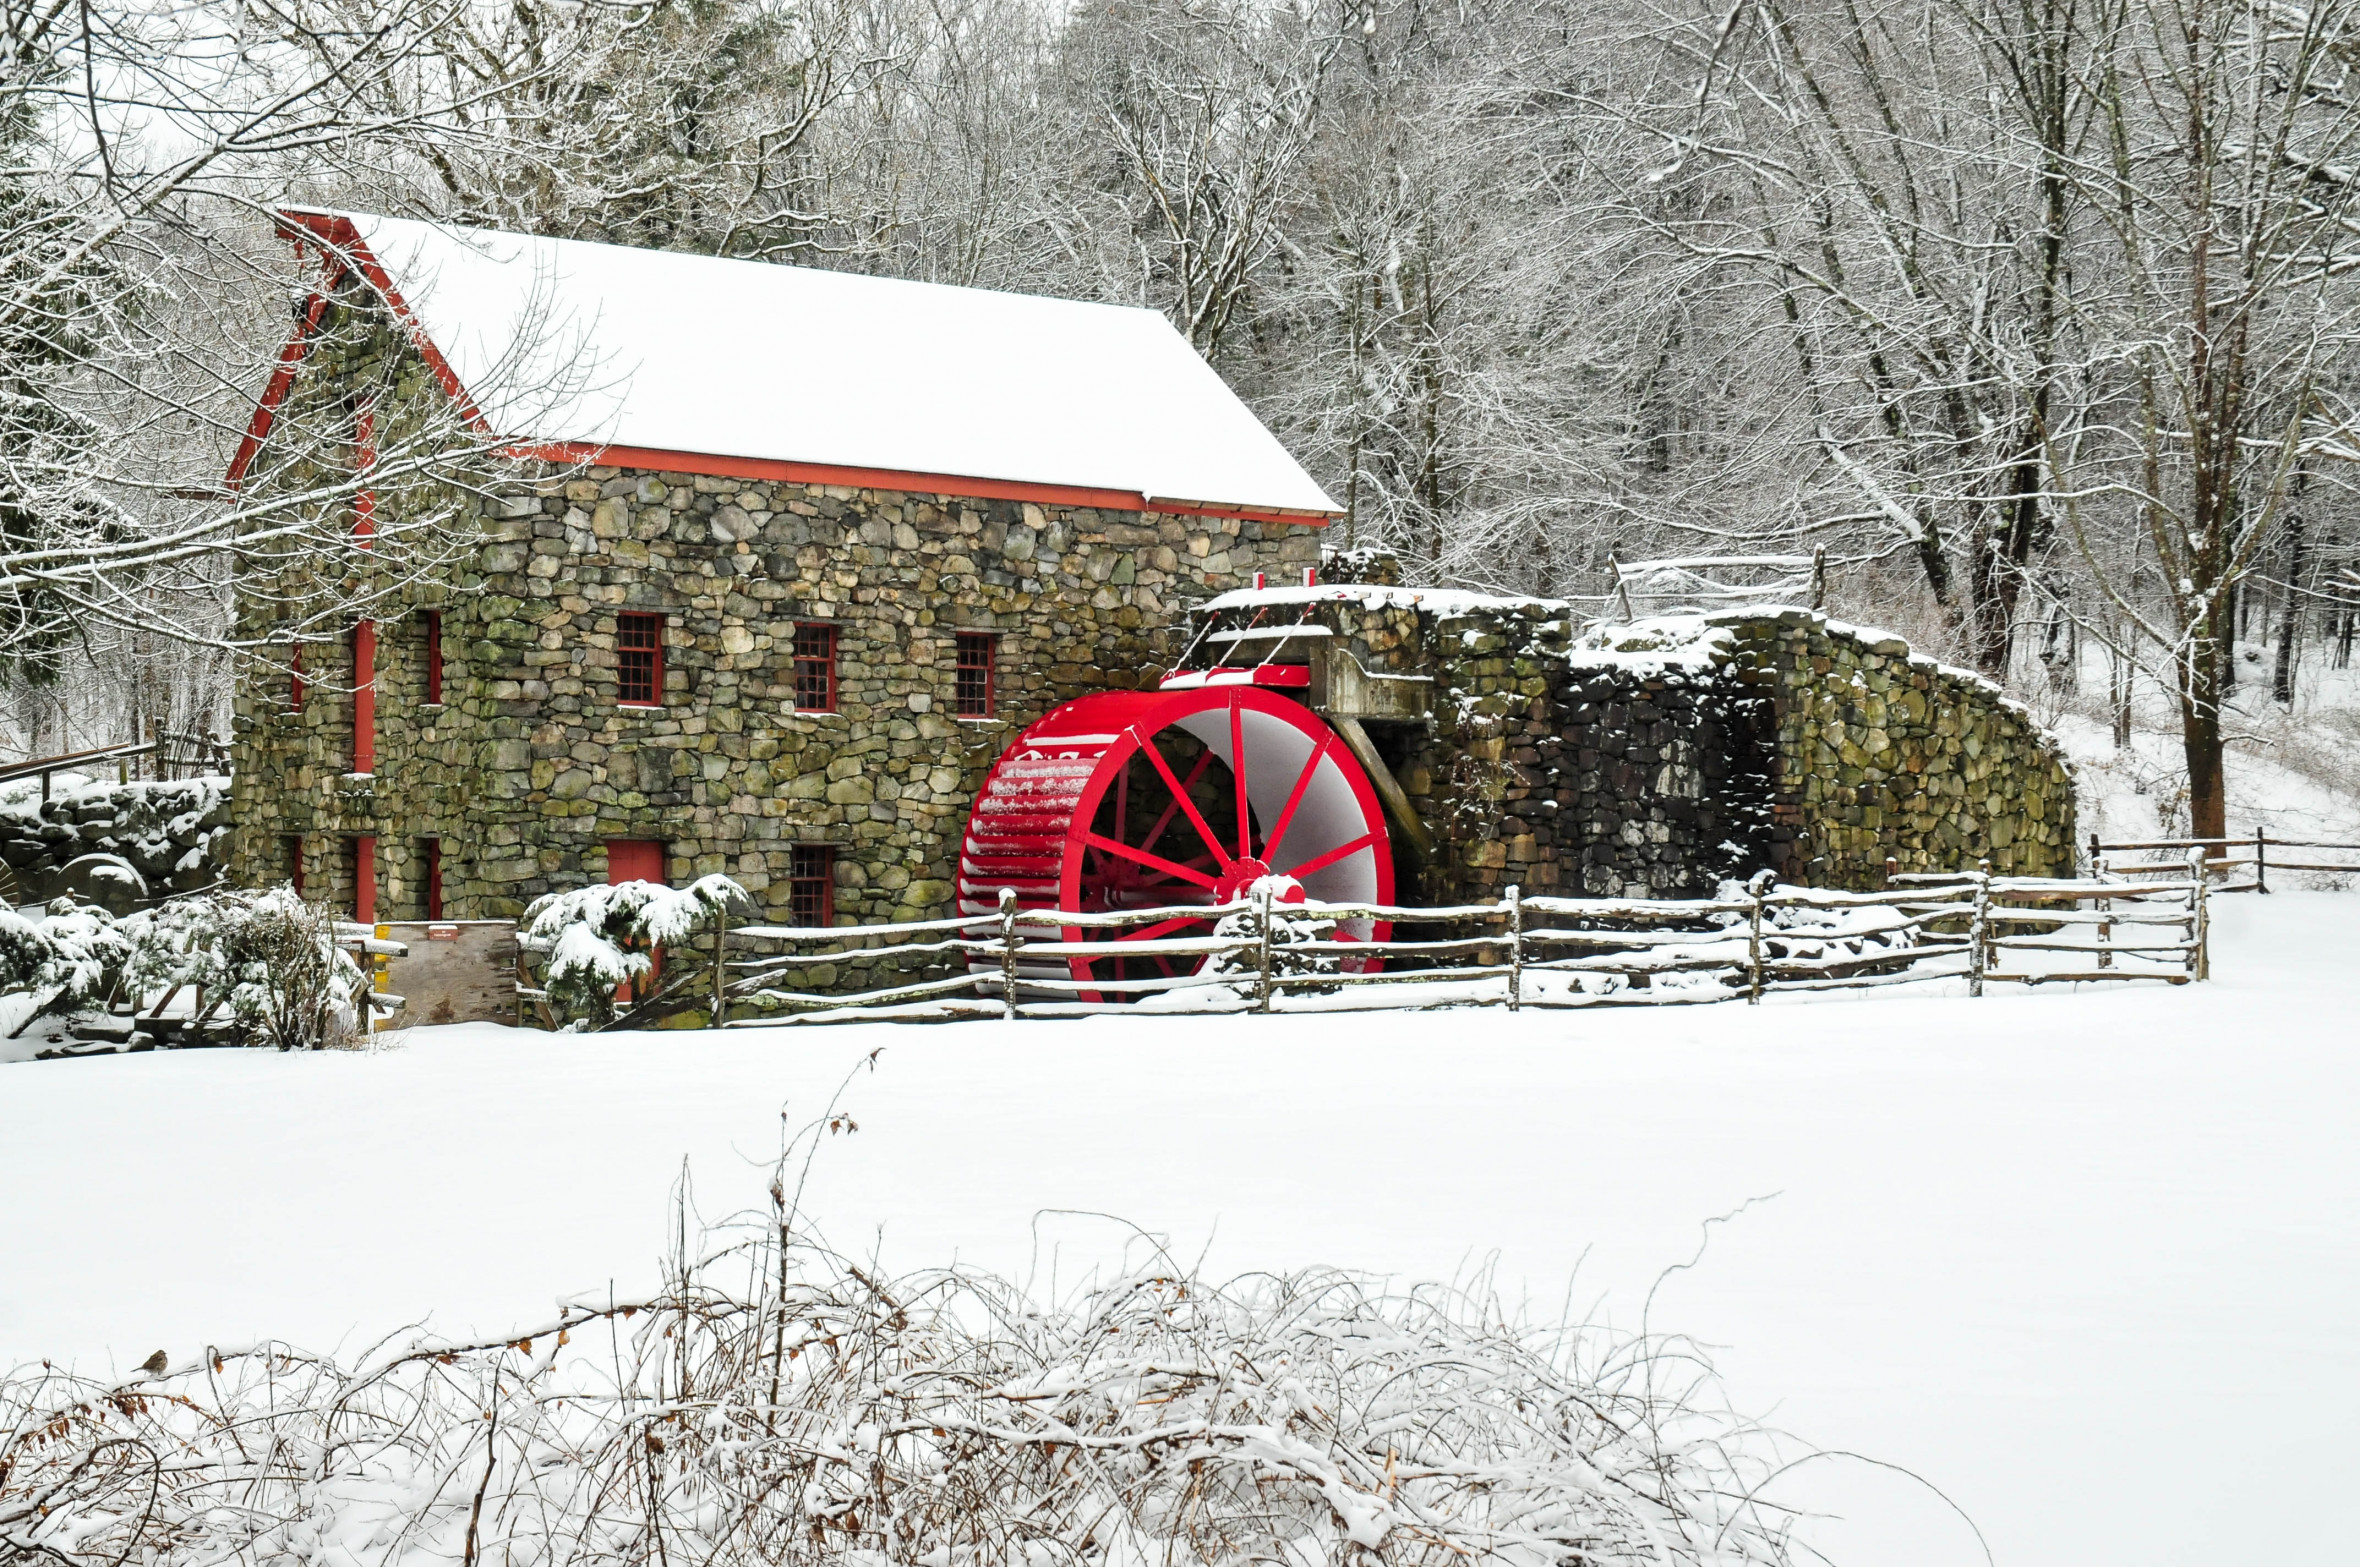 Sudbury Grist Mill in Winter [4559]